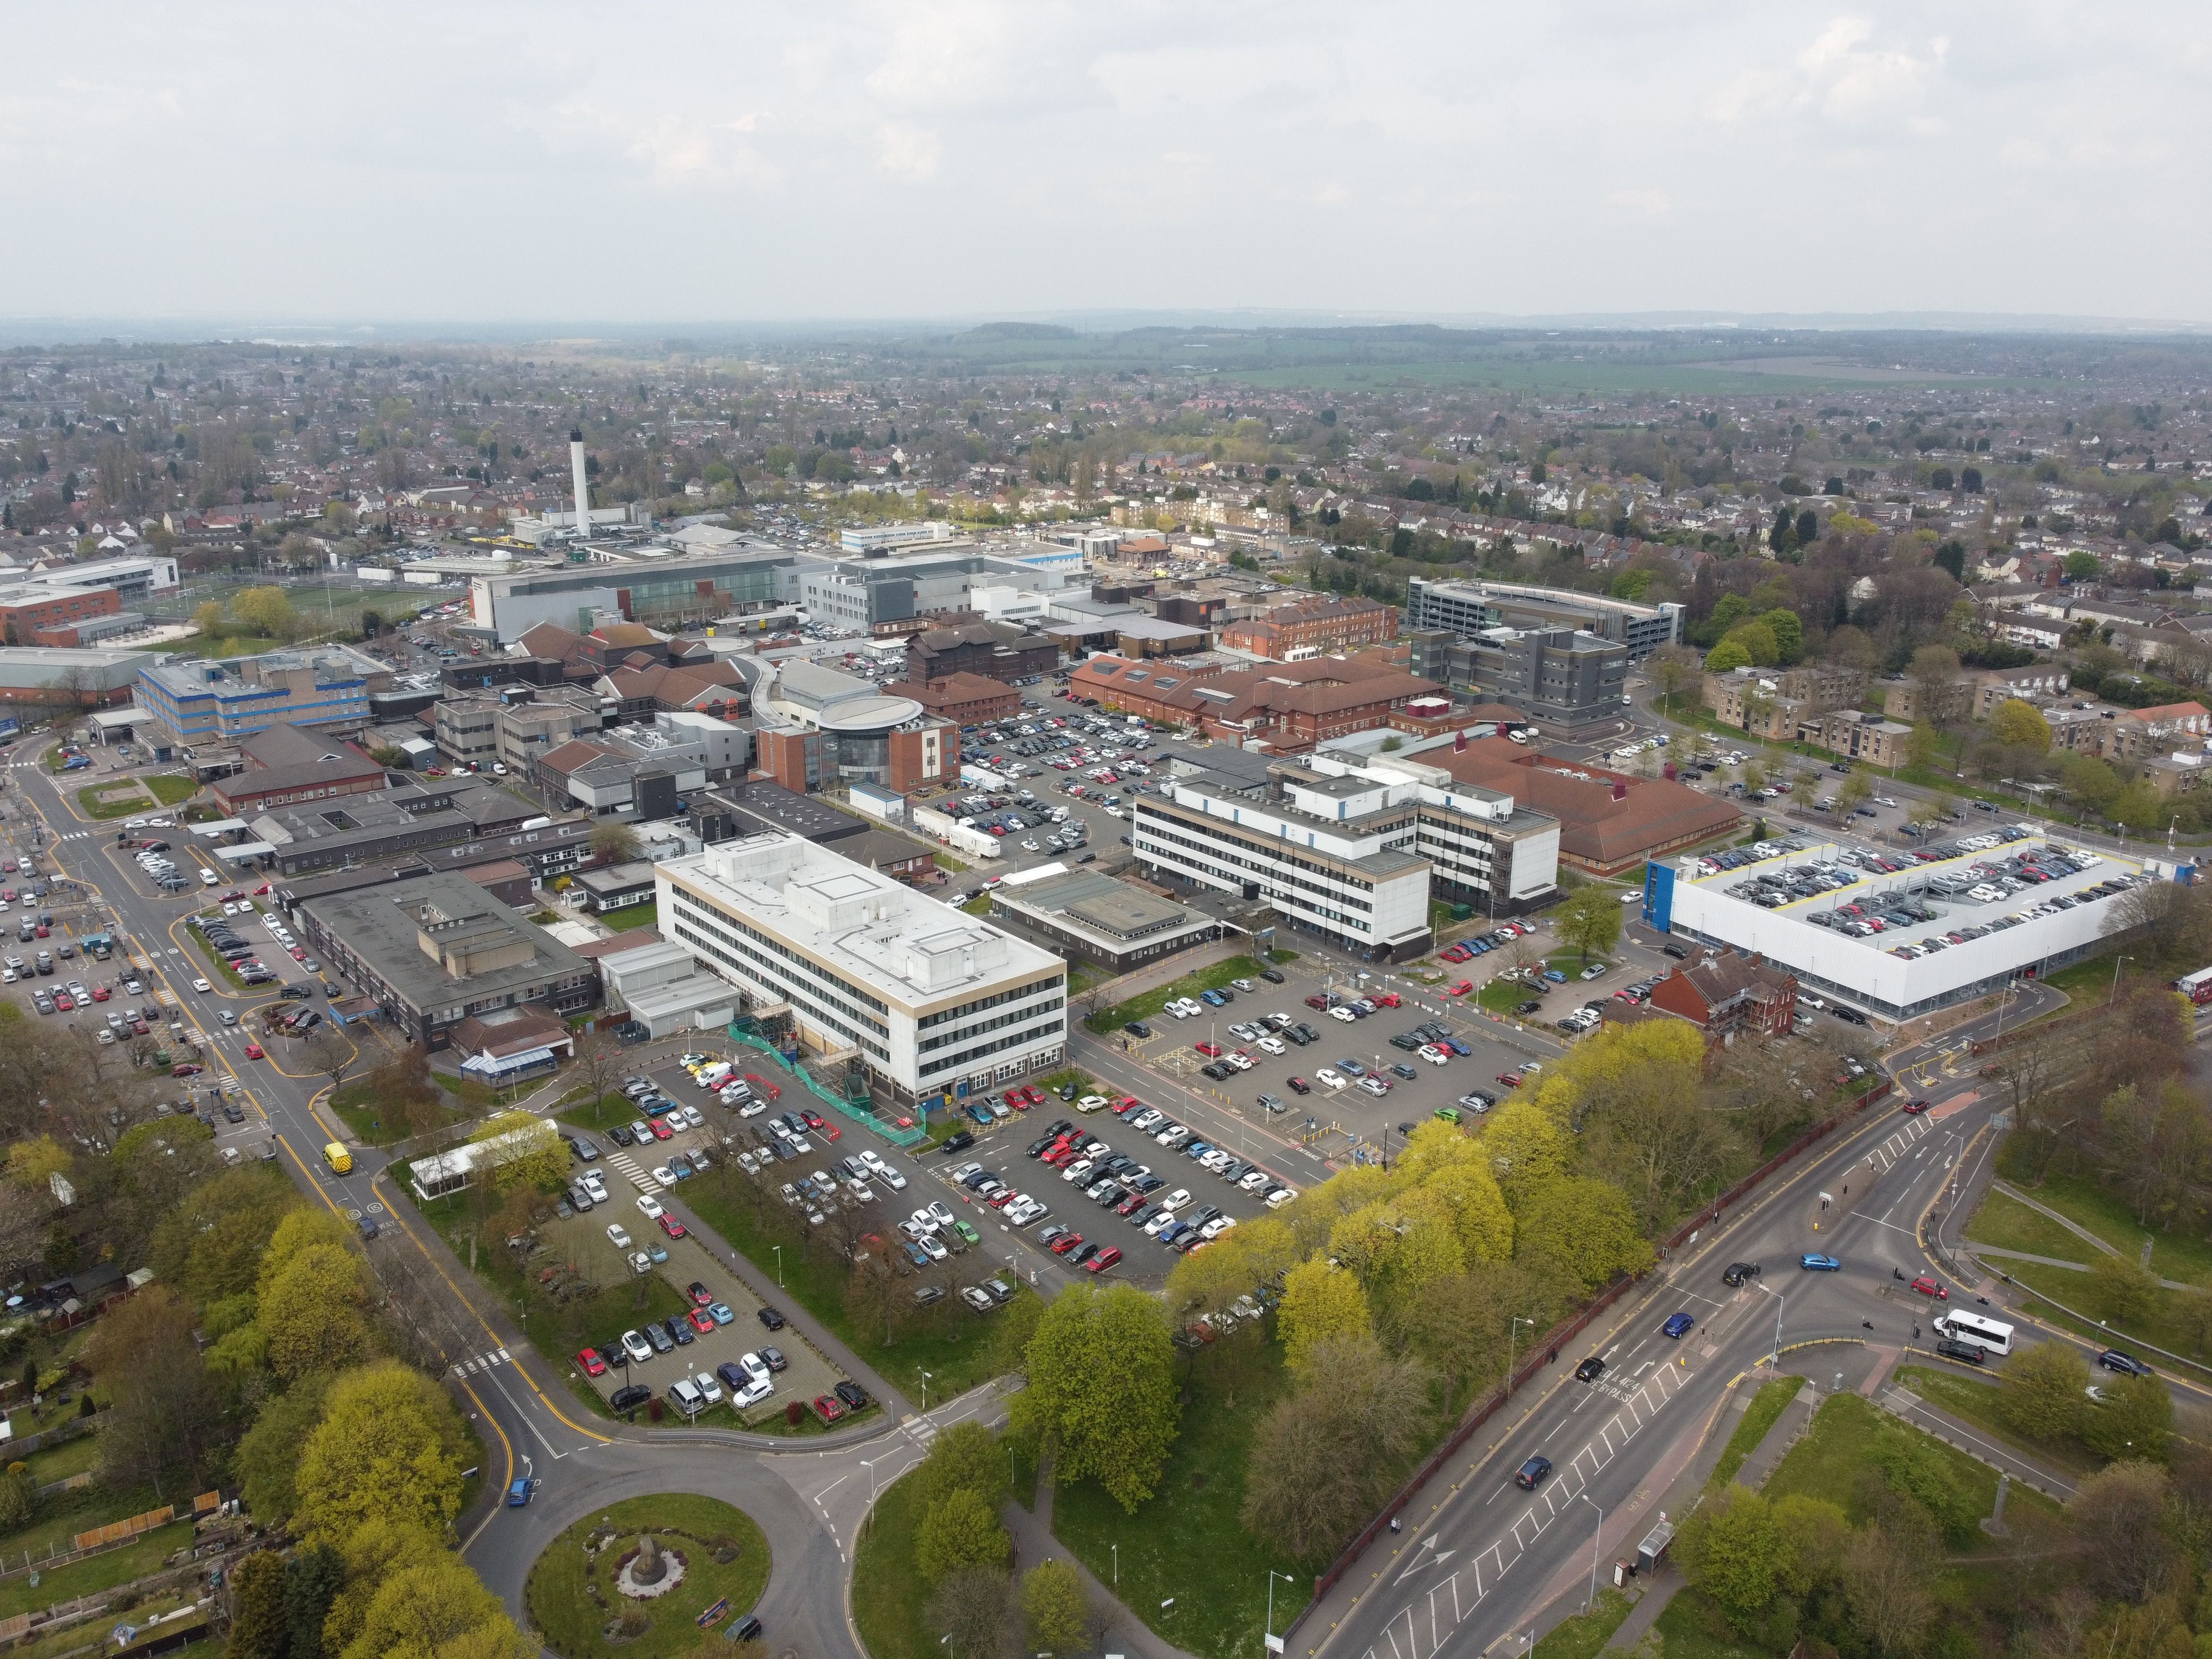 Wolverhampton hospital building closes for six months as major roof repairs begin